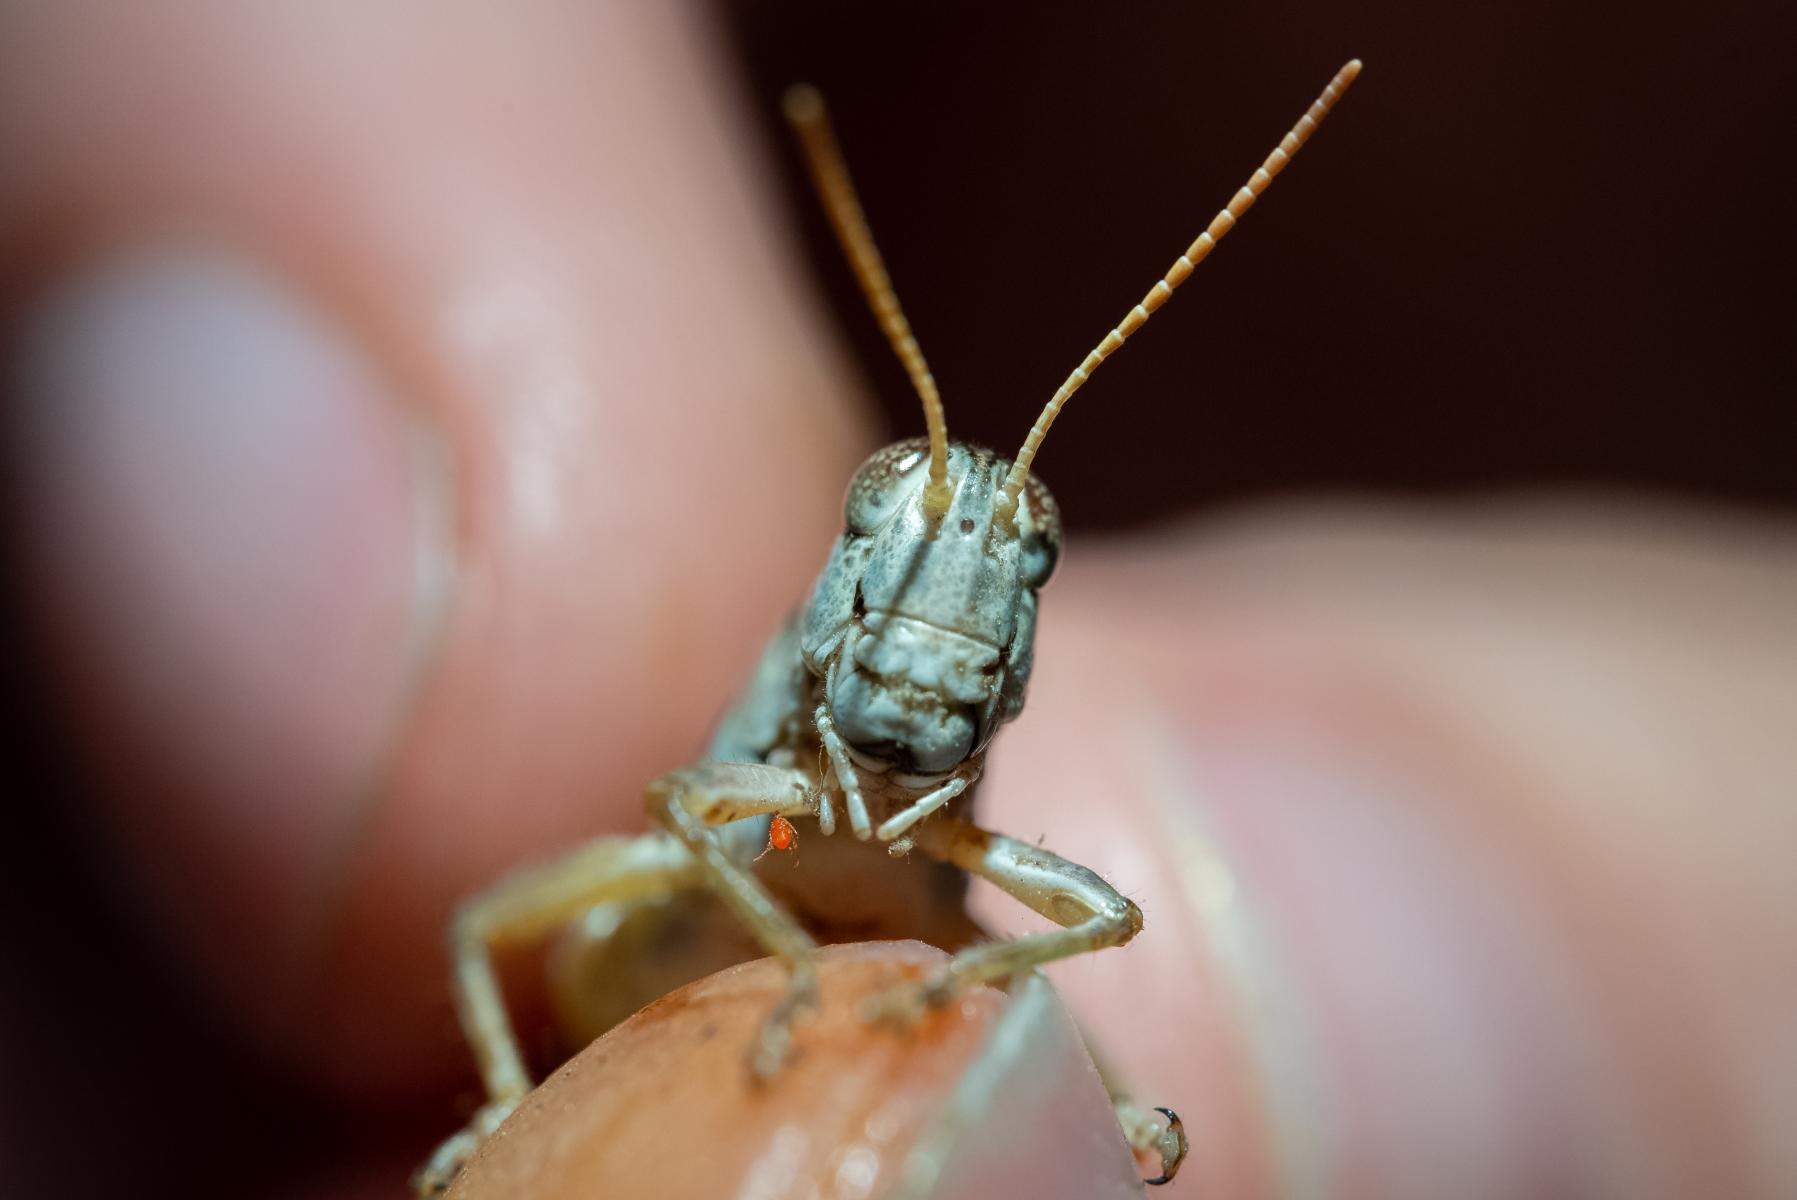 Grasshopper with mite